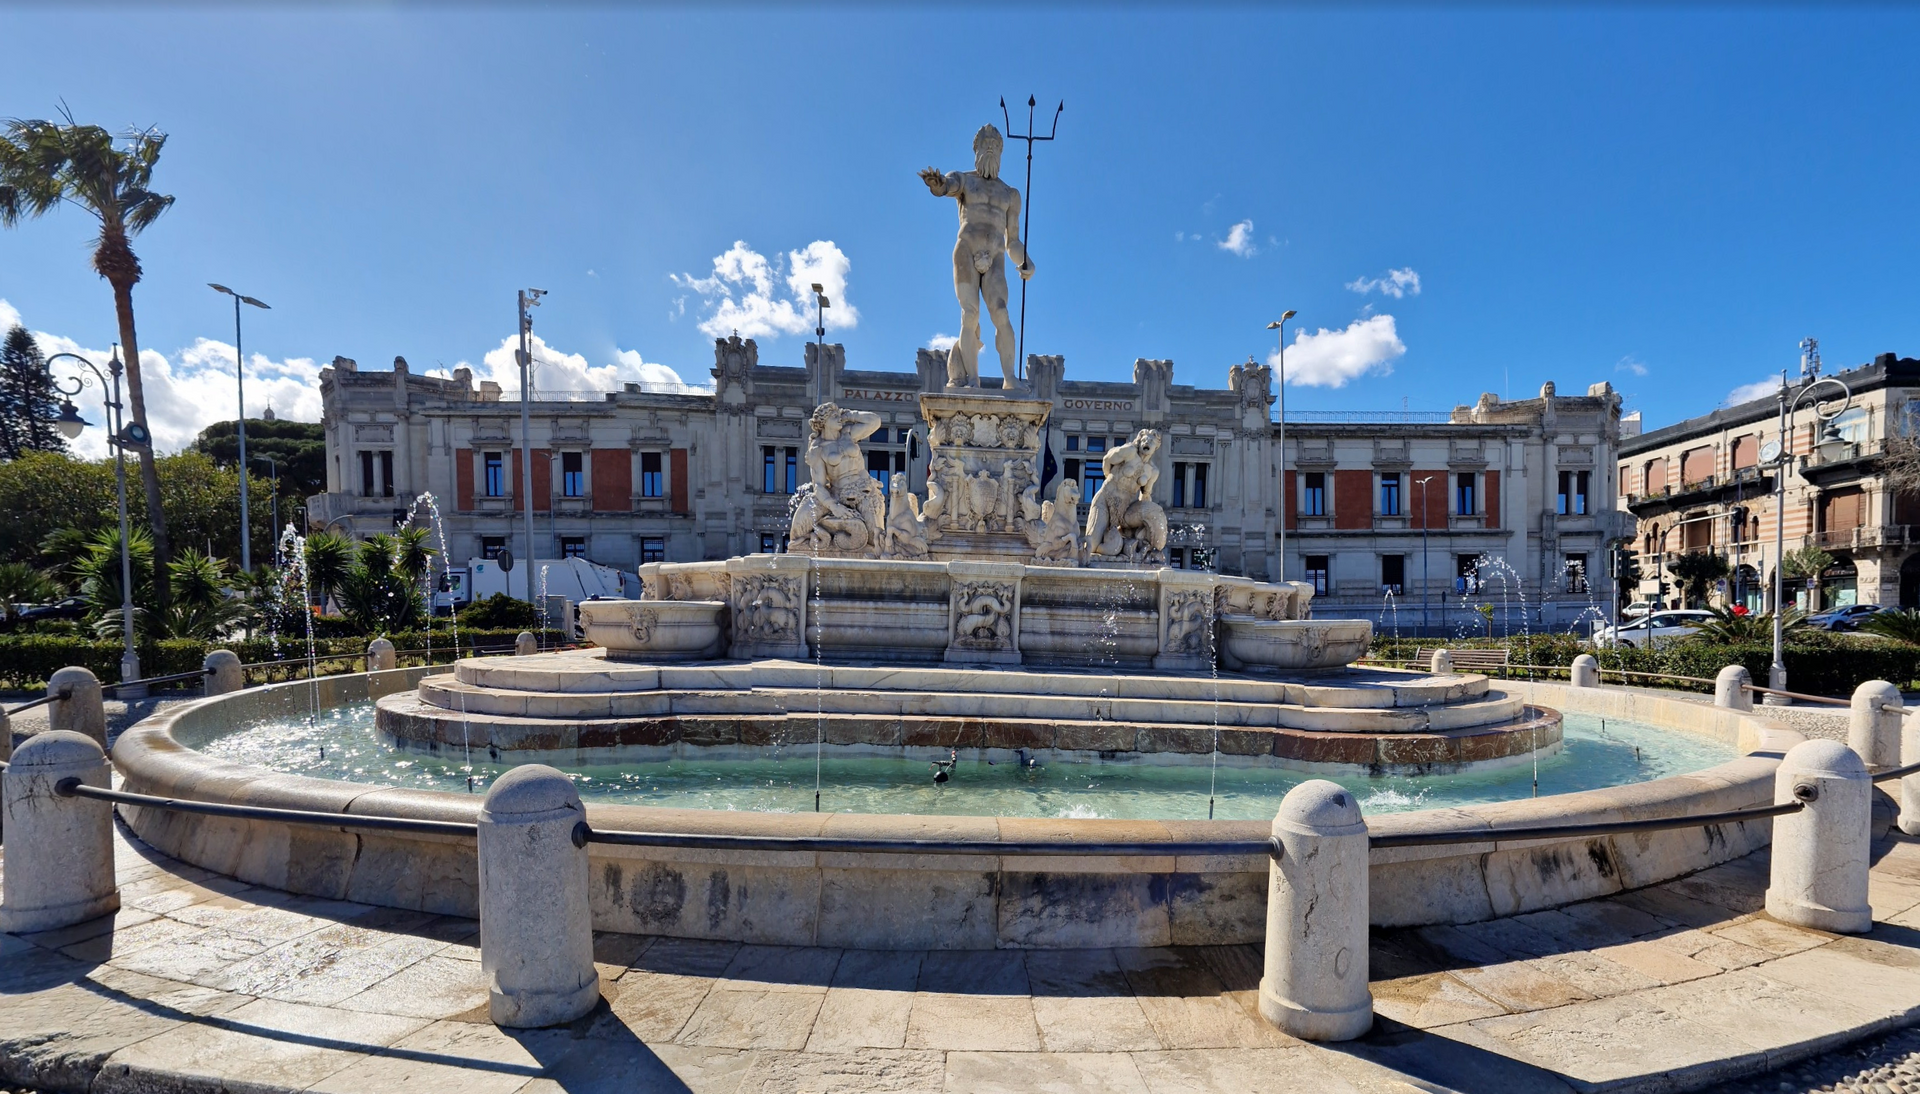 Montorsoli's Fountain of Neptune by Google Earth